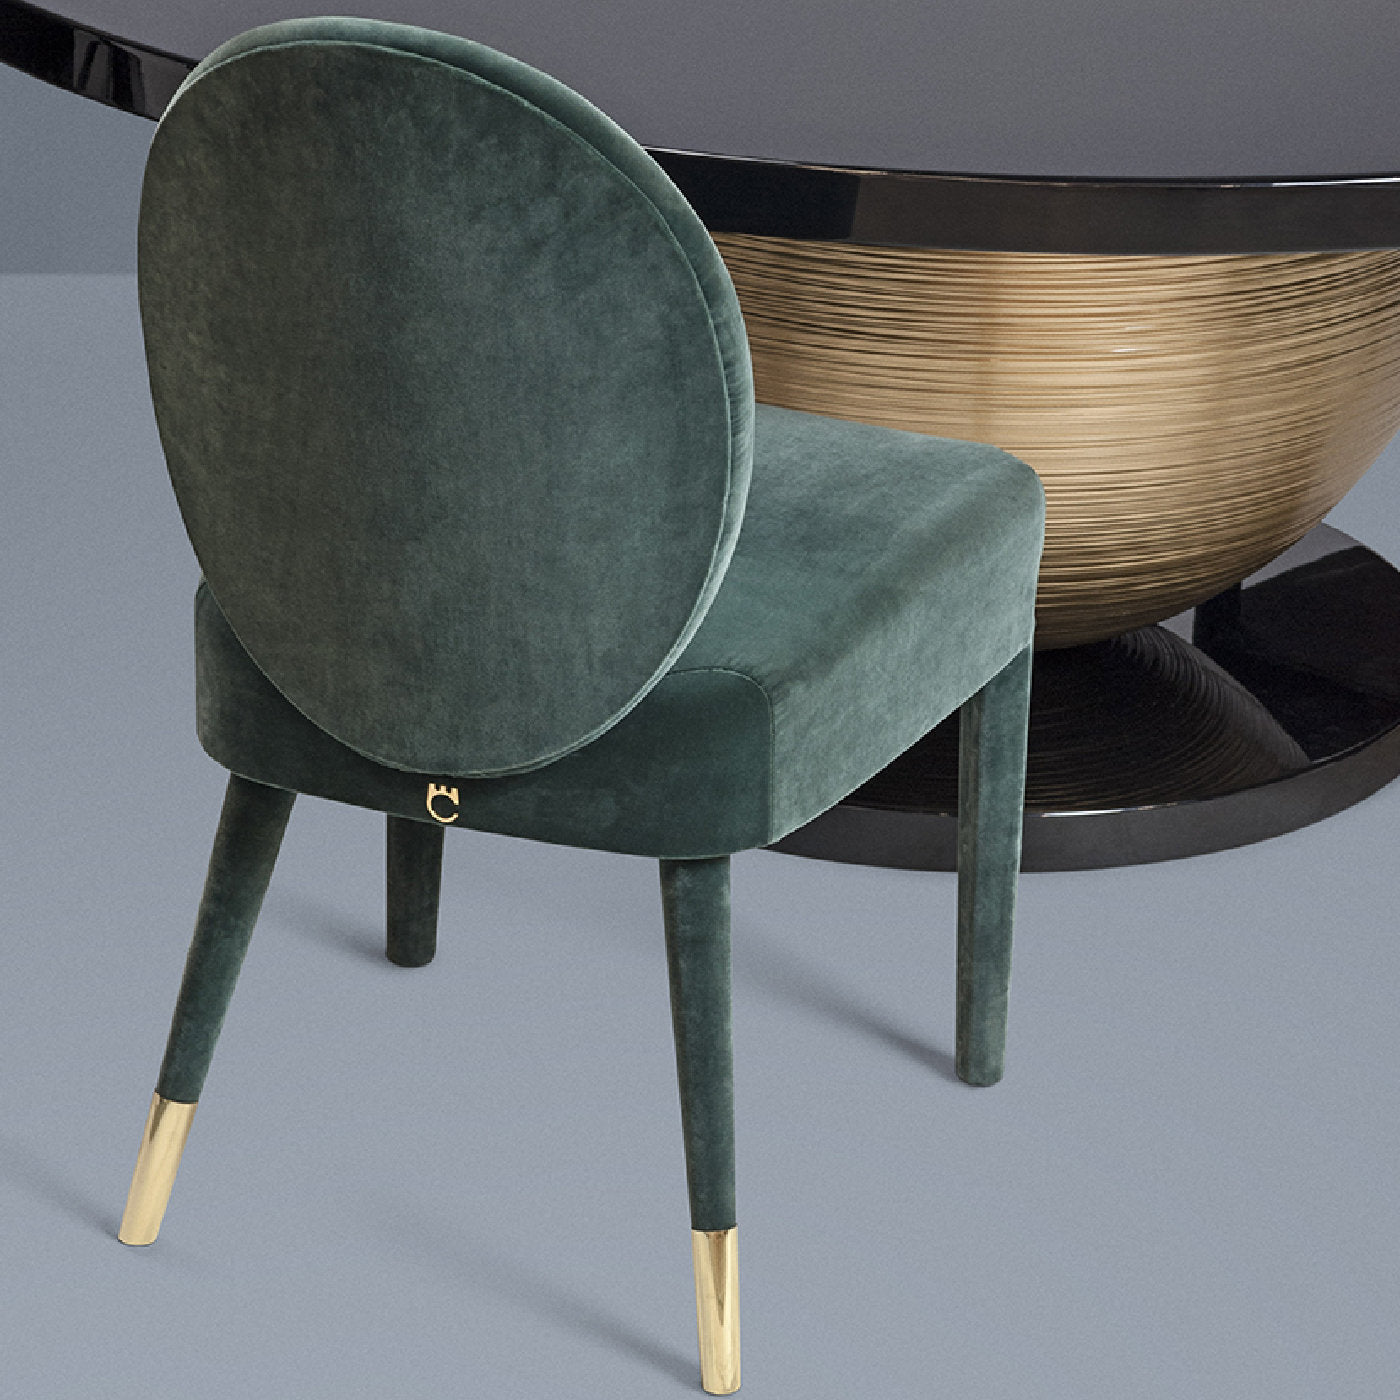 Sofia Green Chair - Alternative view 5